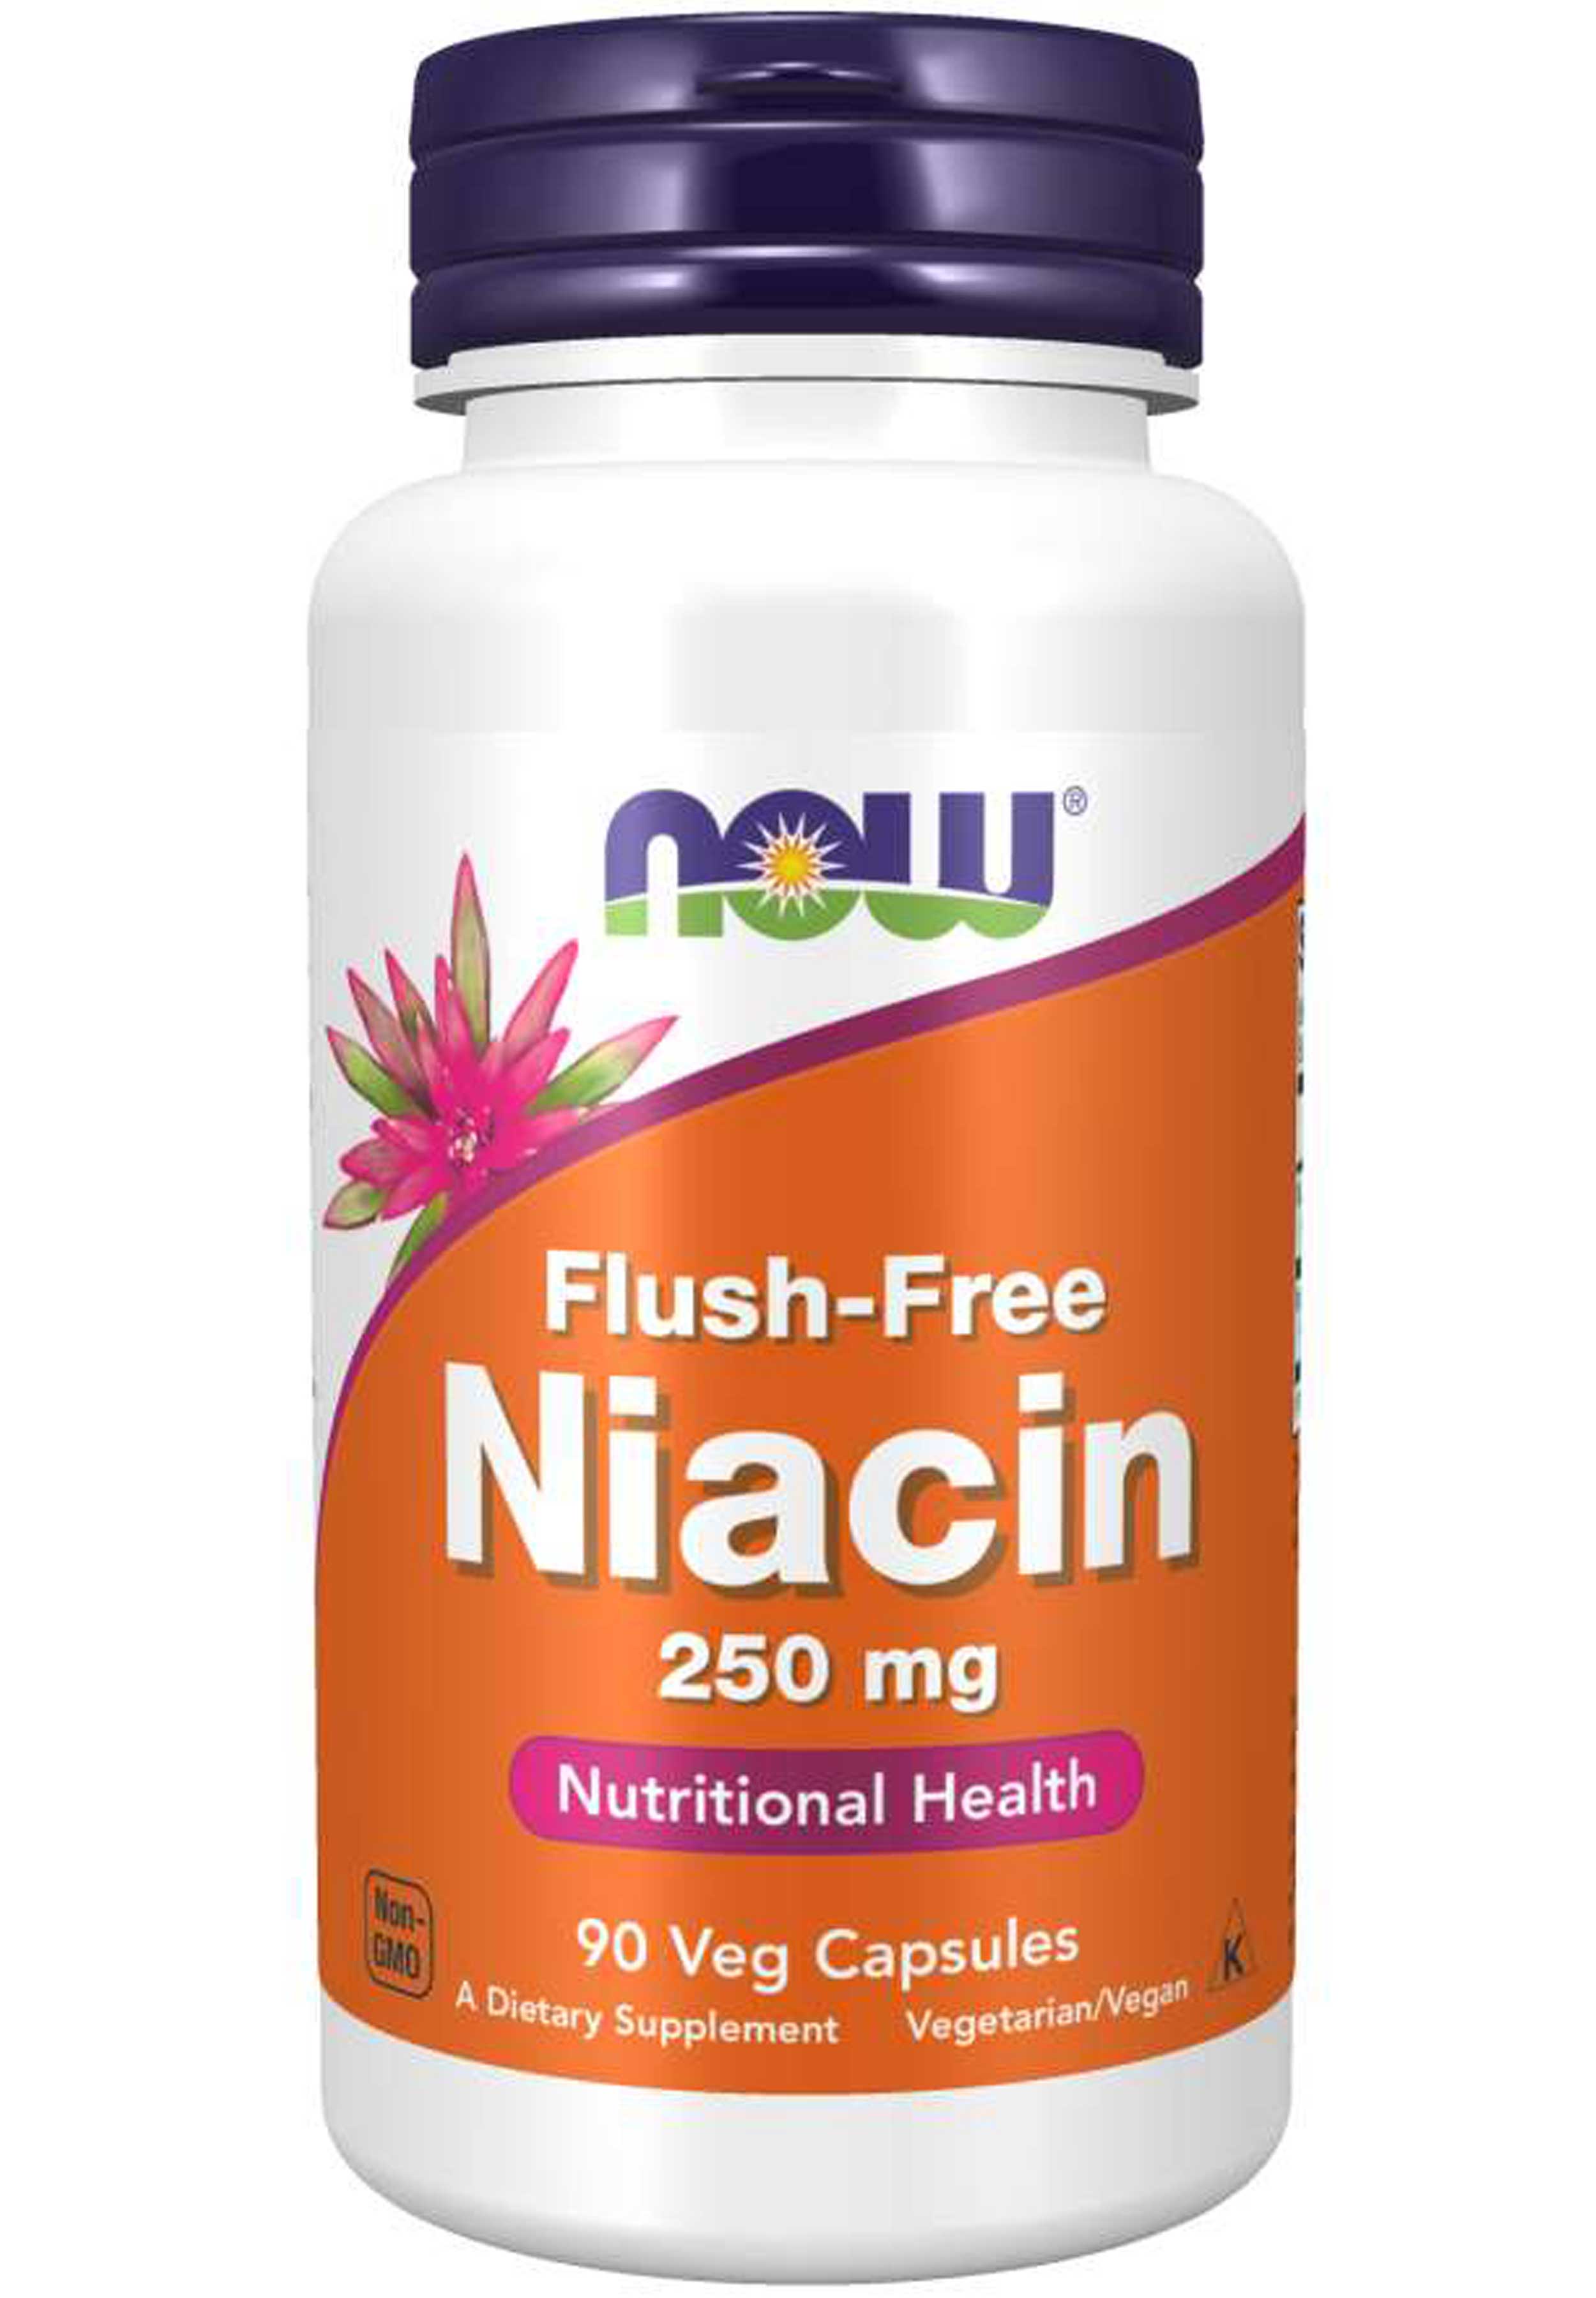 NOW Flush-Free Niacin 250 mg